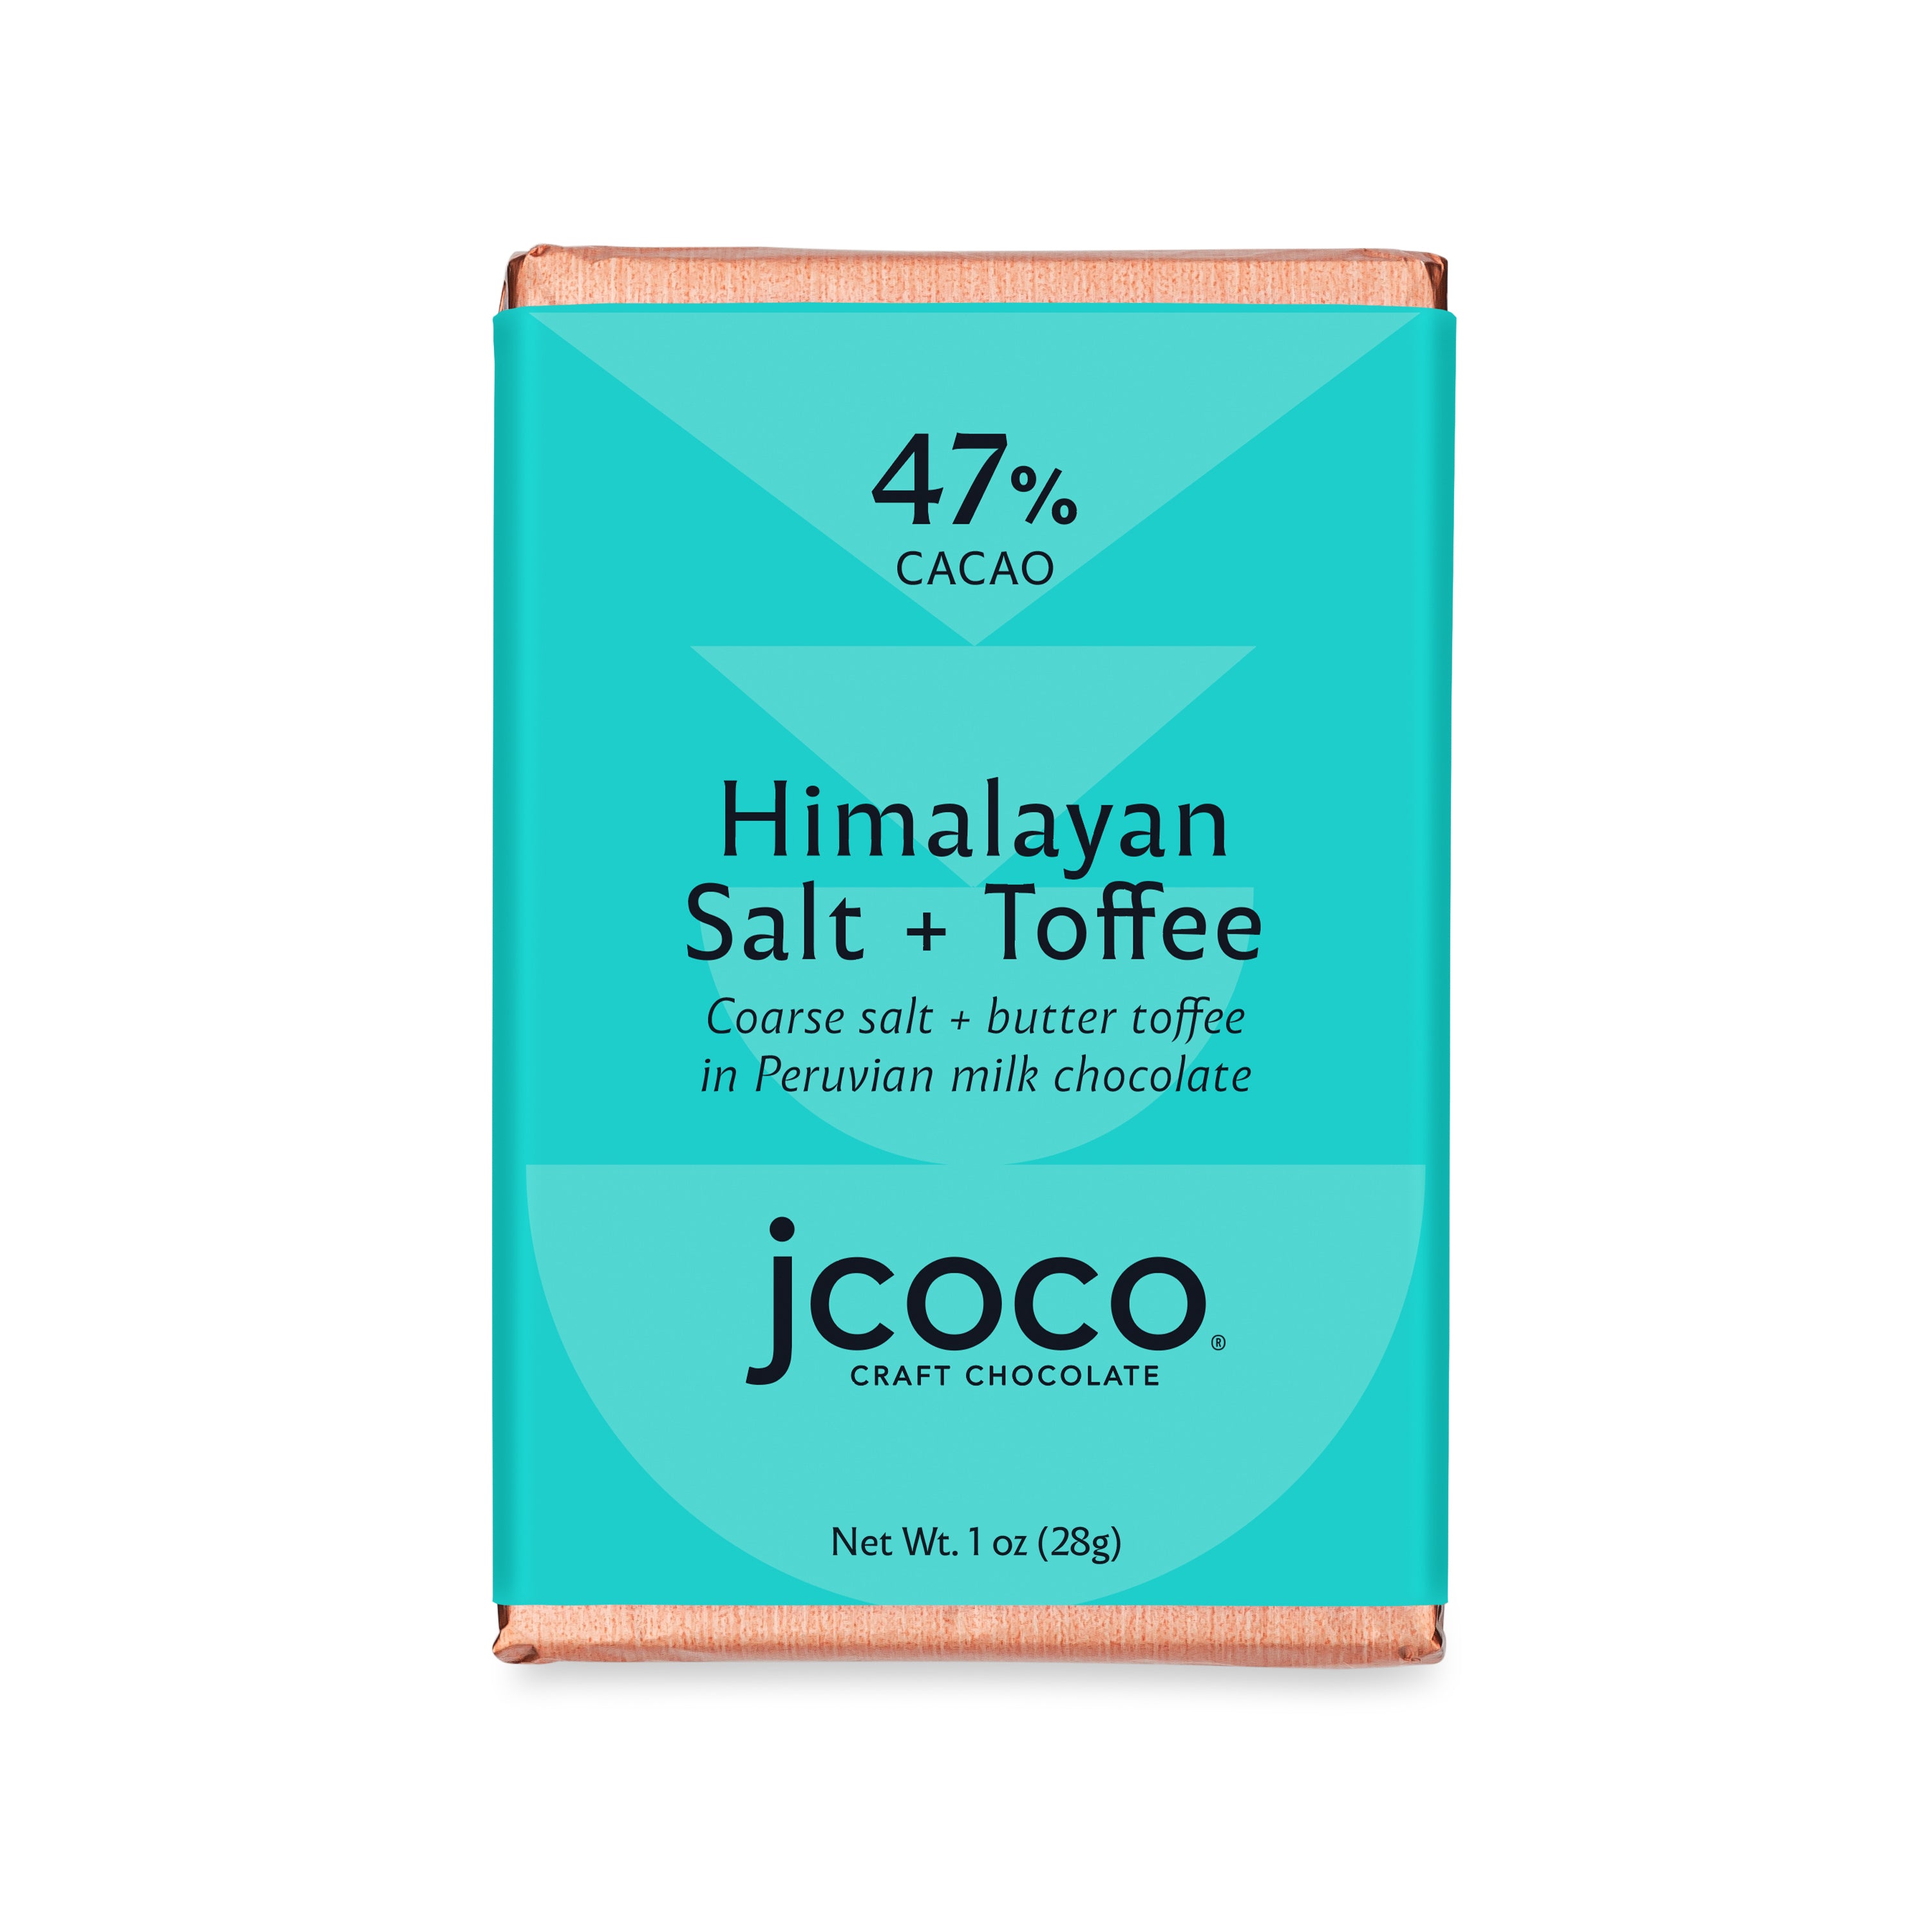 jcoco 47% cacao himalayan salt + toffee chocolate bar 1oz